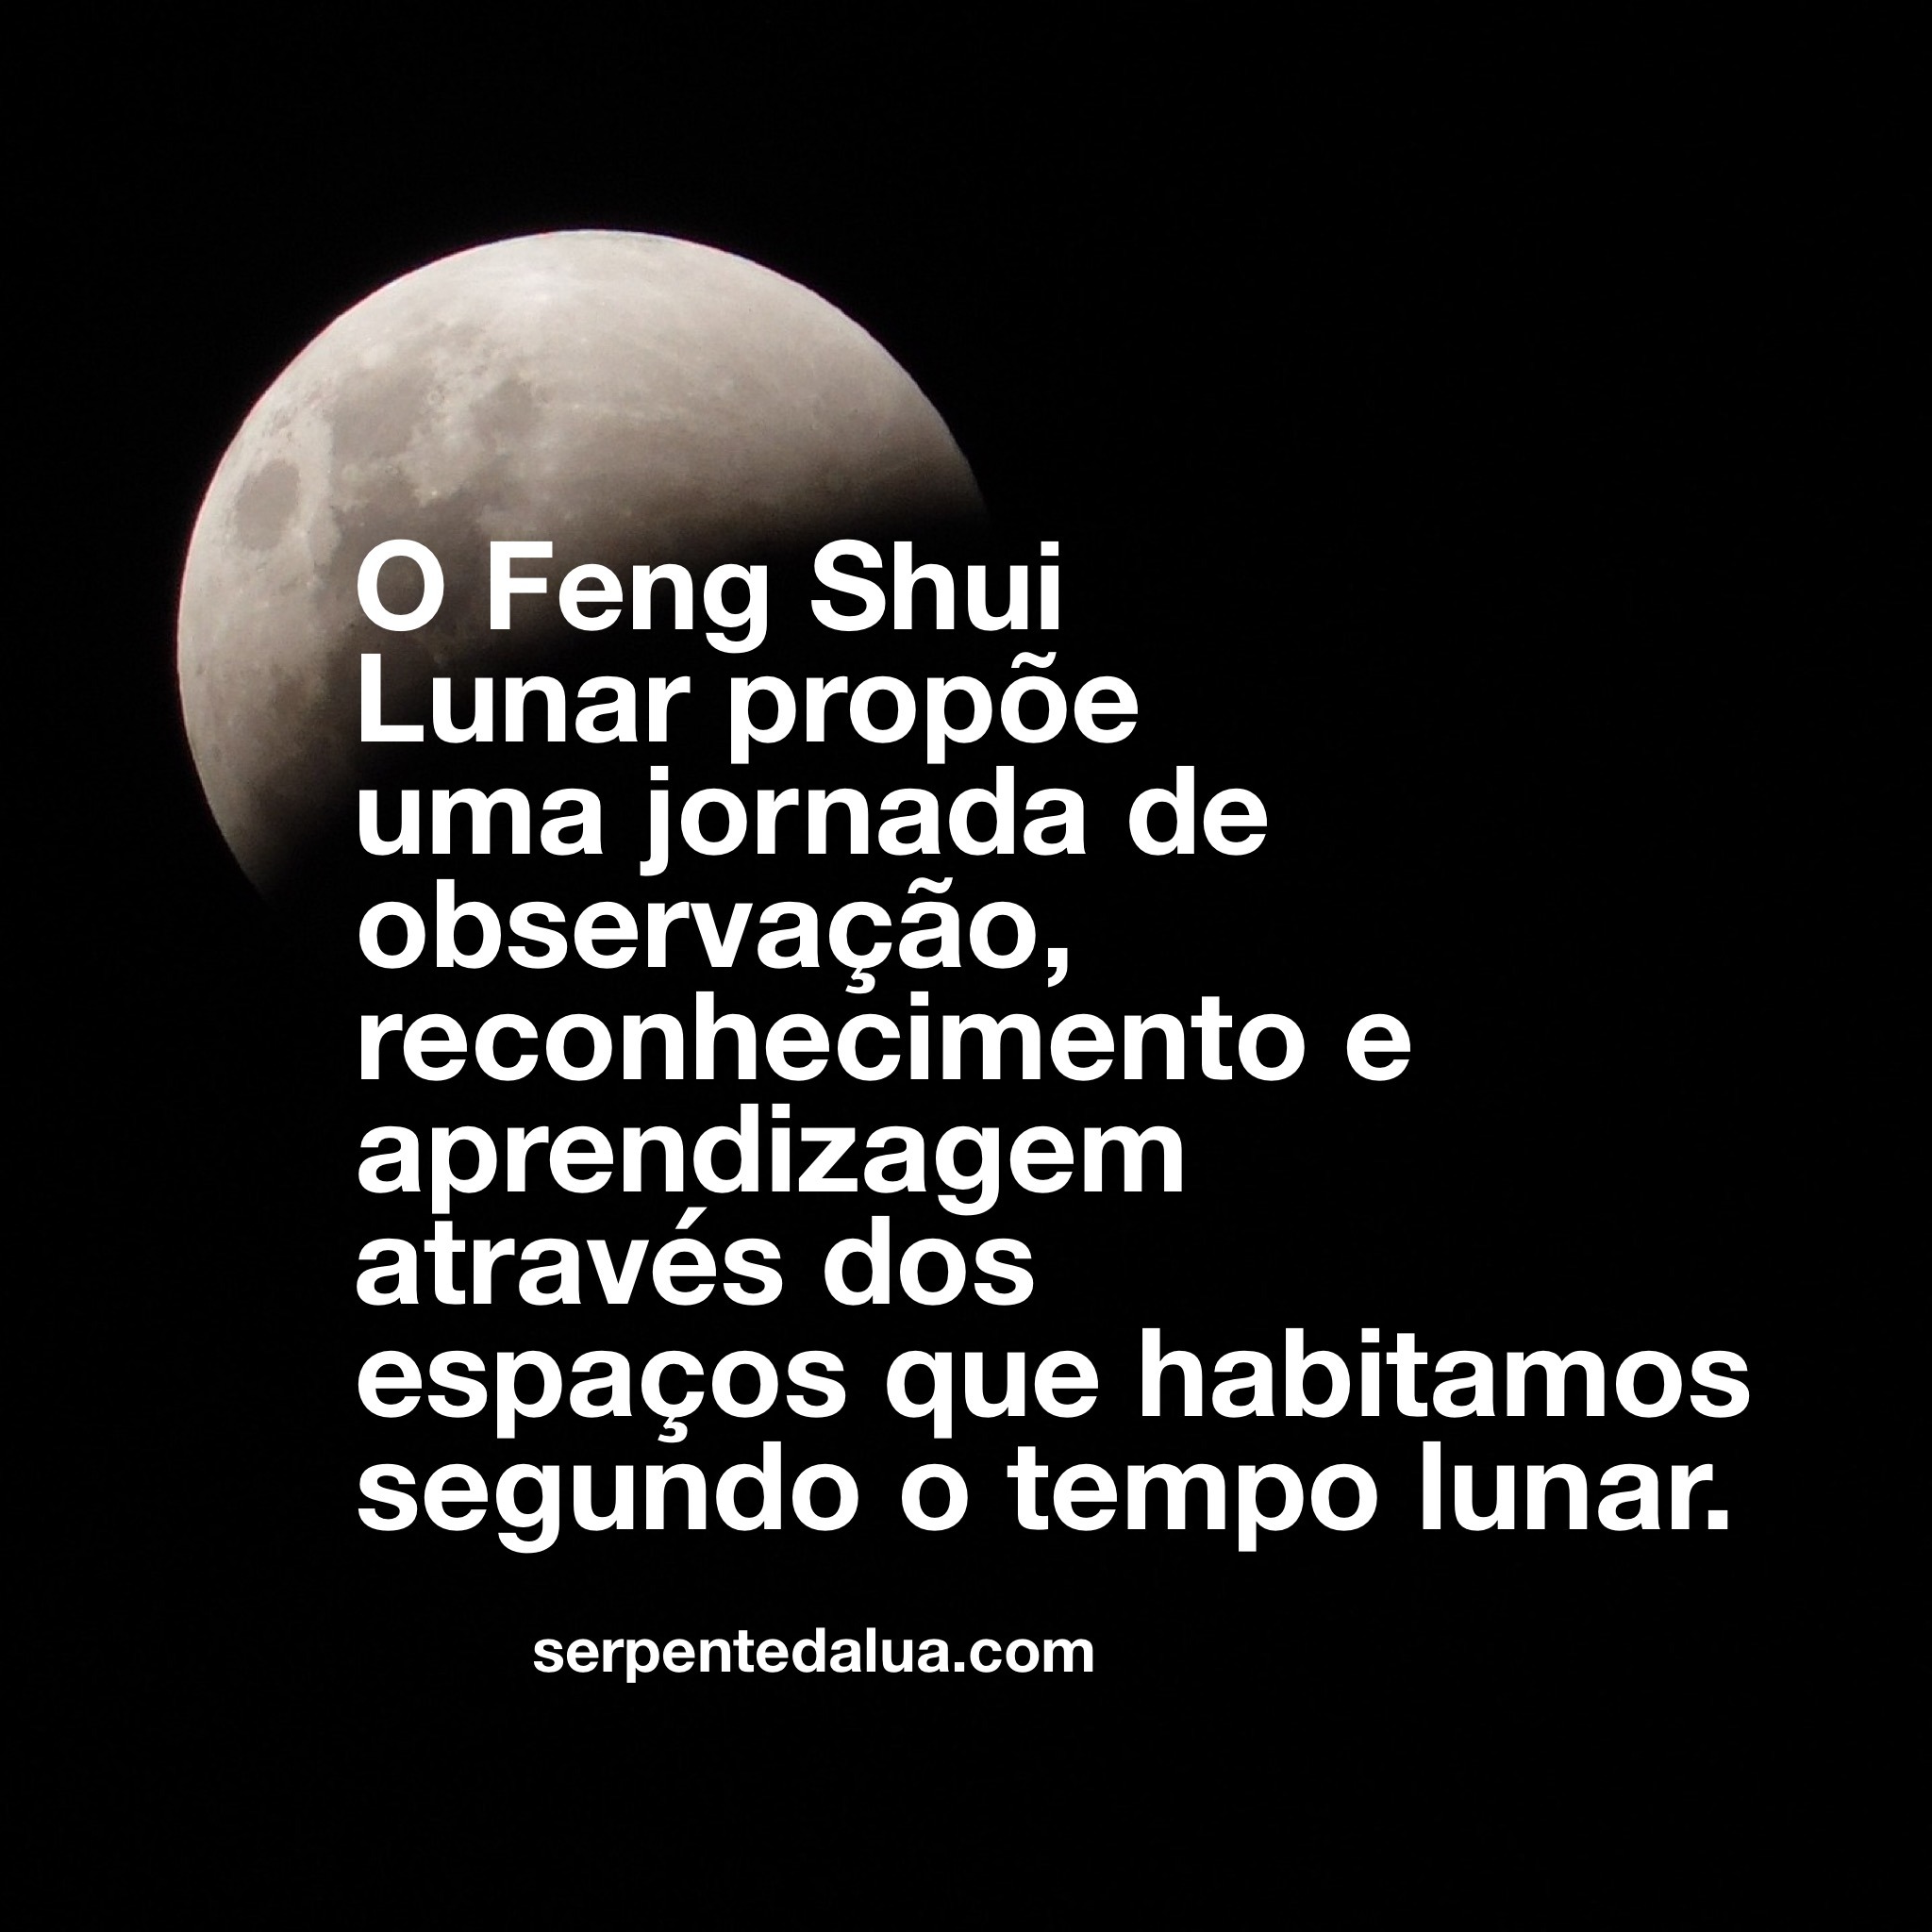 Curso-Feng-Shui-Lunar